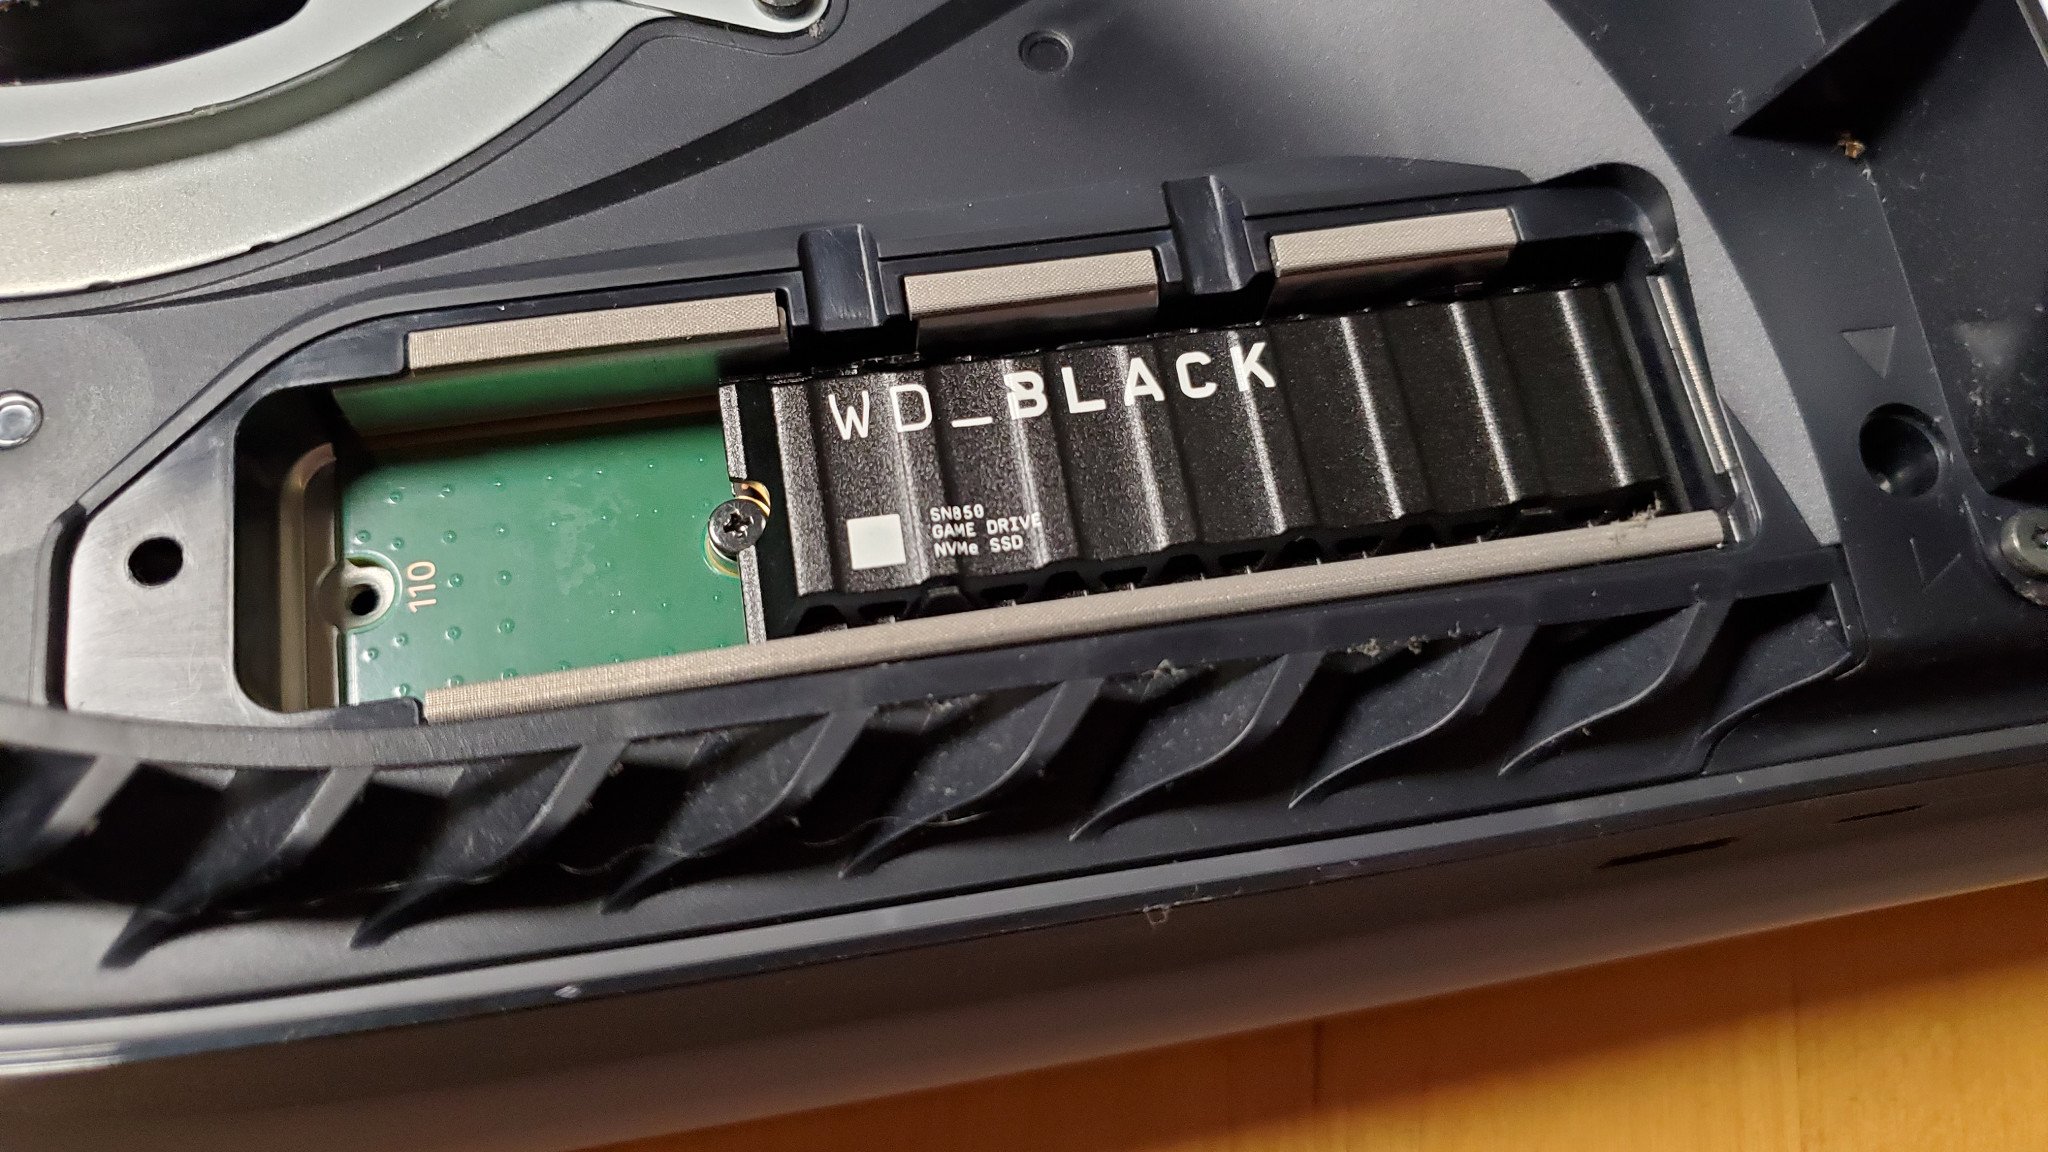 PS5 SSD TEST - WD Black SN850X vs WD Black SN850 SSD Comparison 